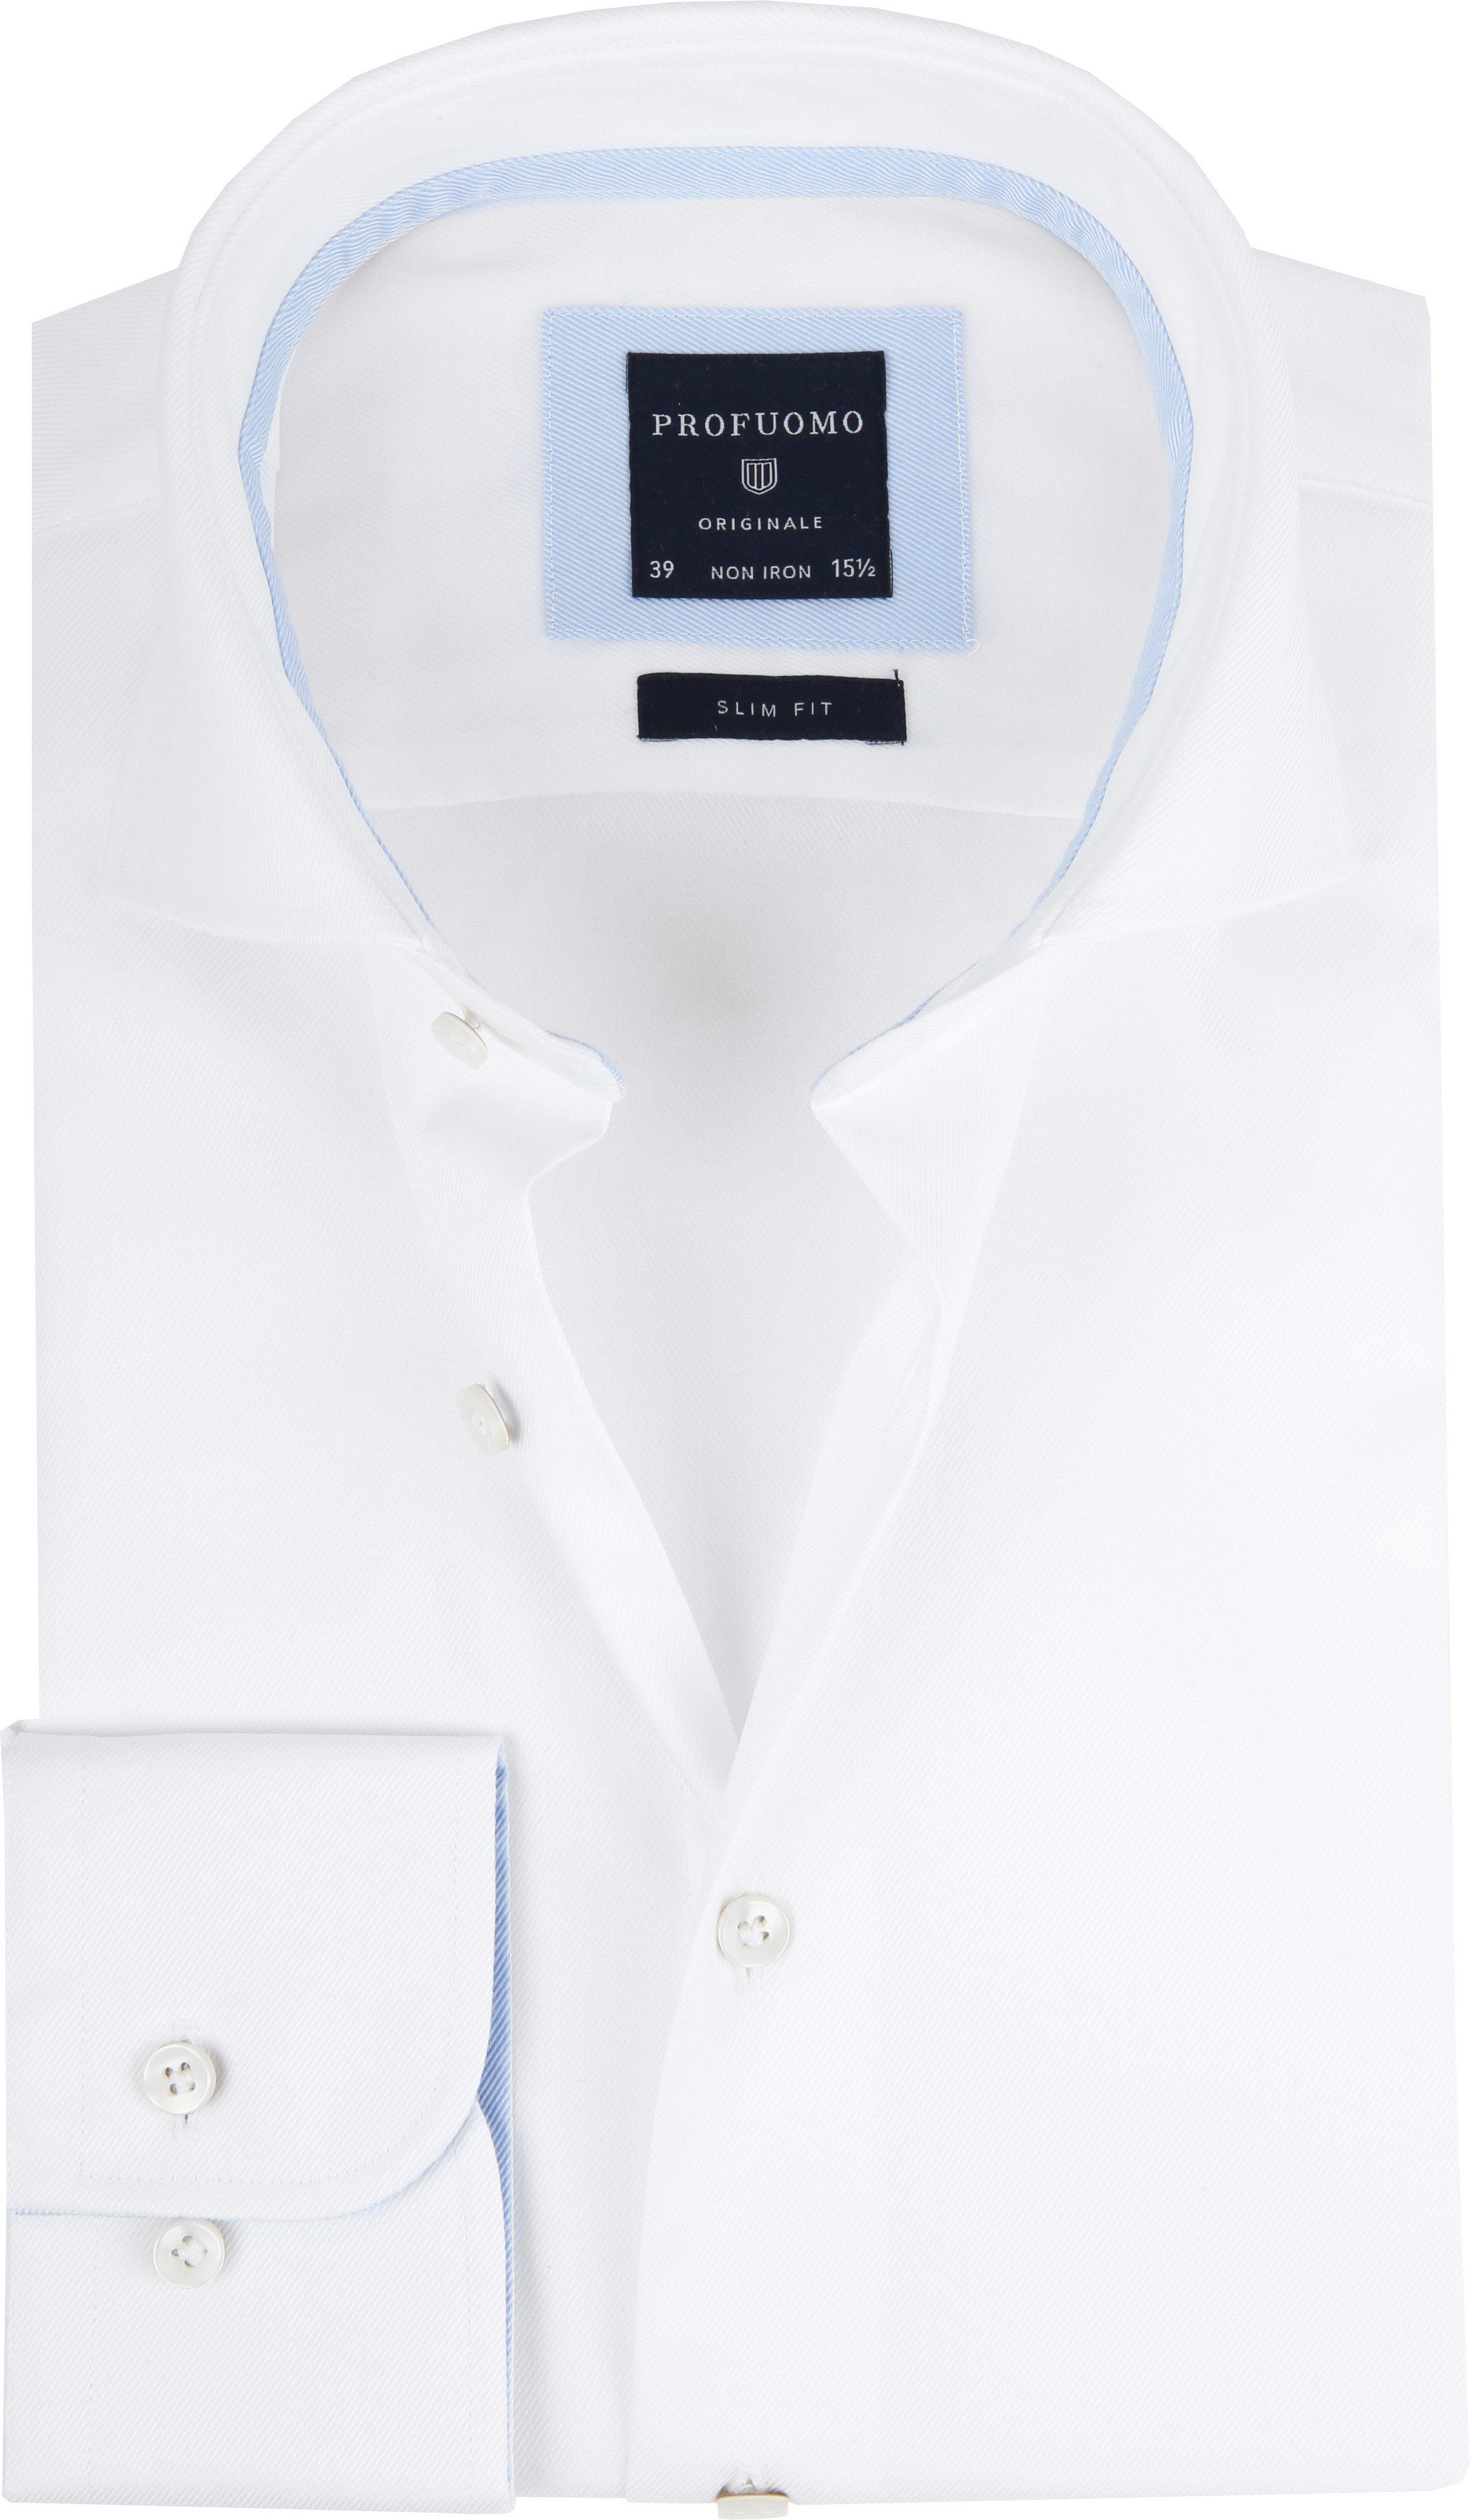 Profuomo Shirt Blue Accent White size 14.5